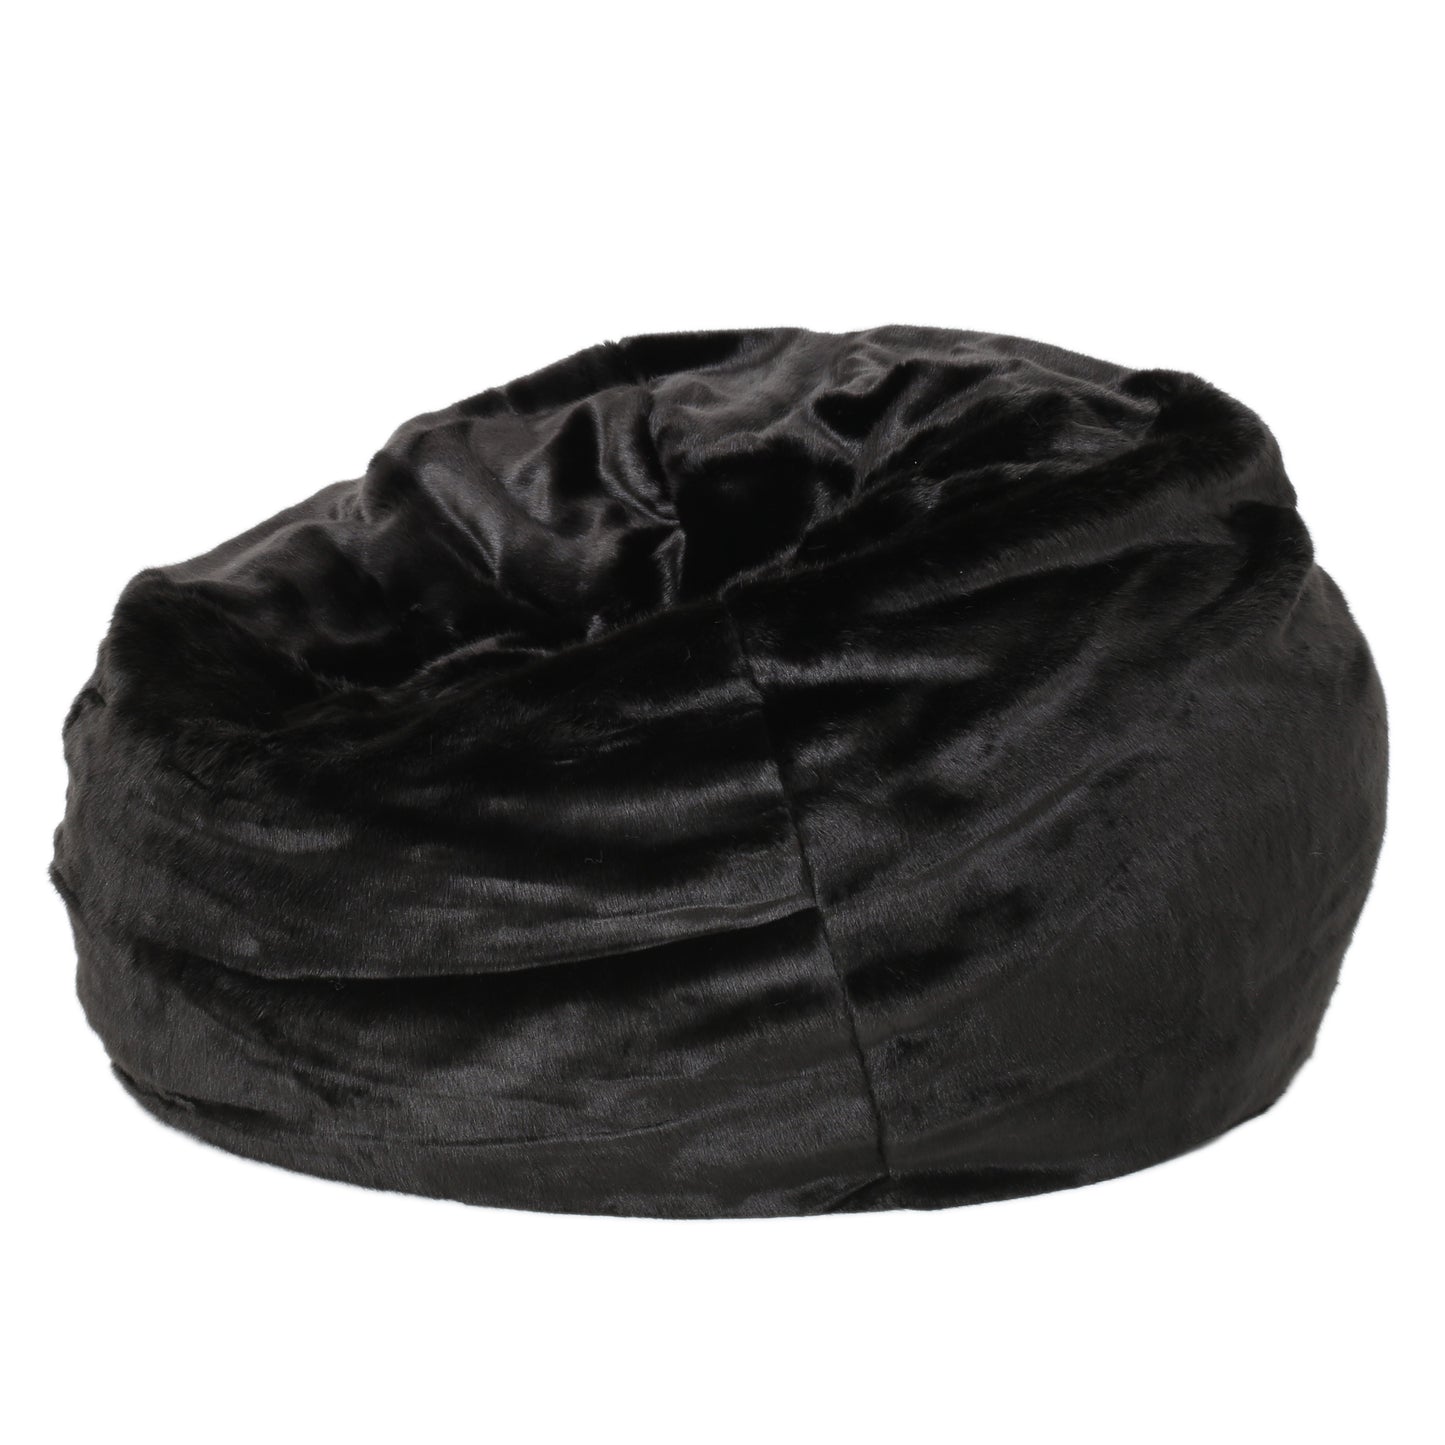 Malic Plush New Black Fur Fabric Bean Bag